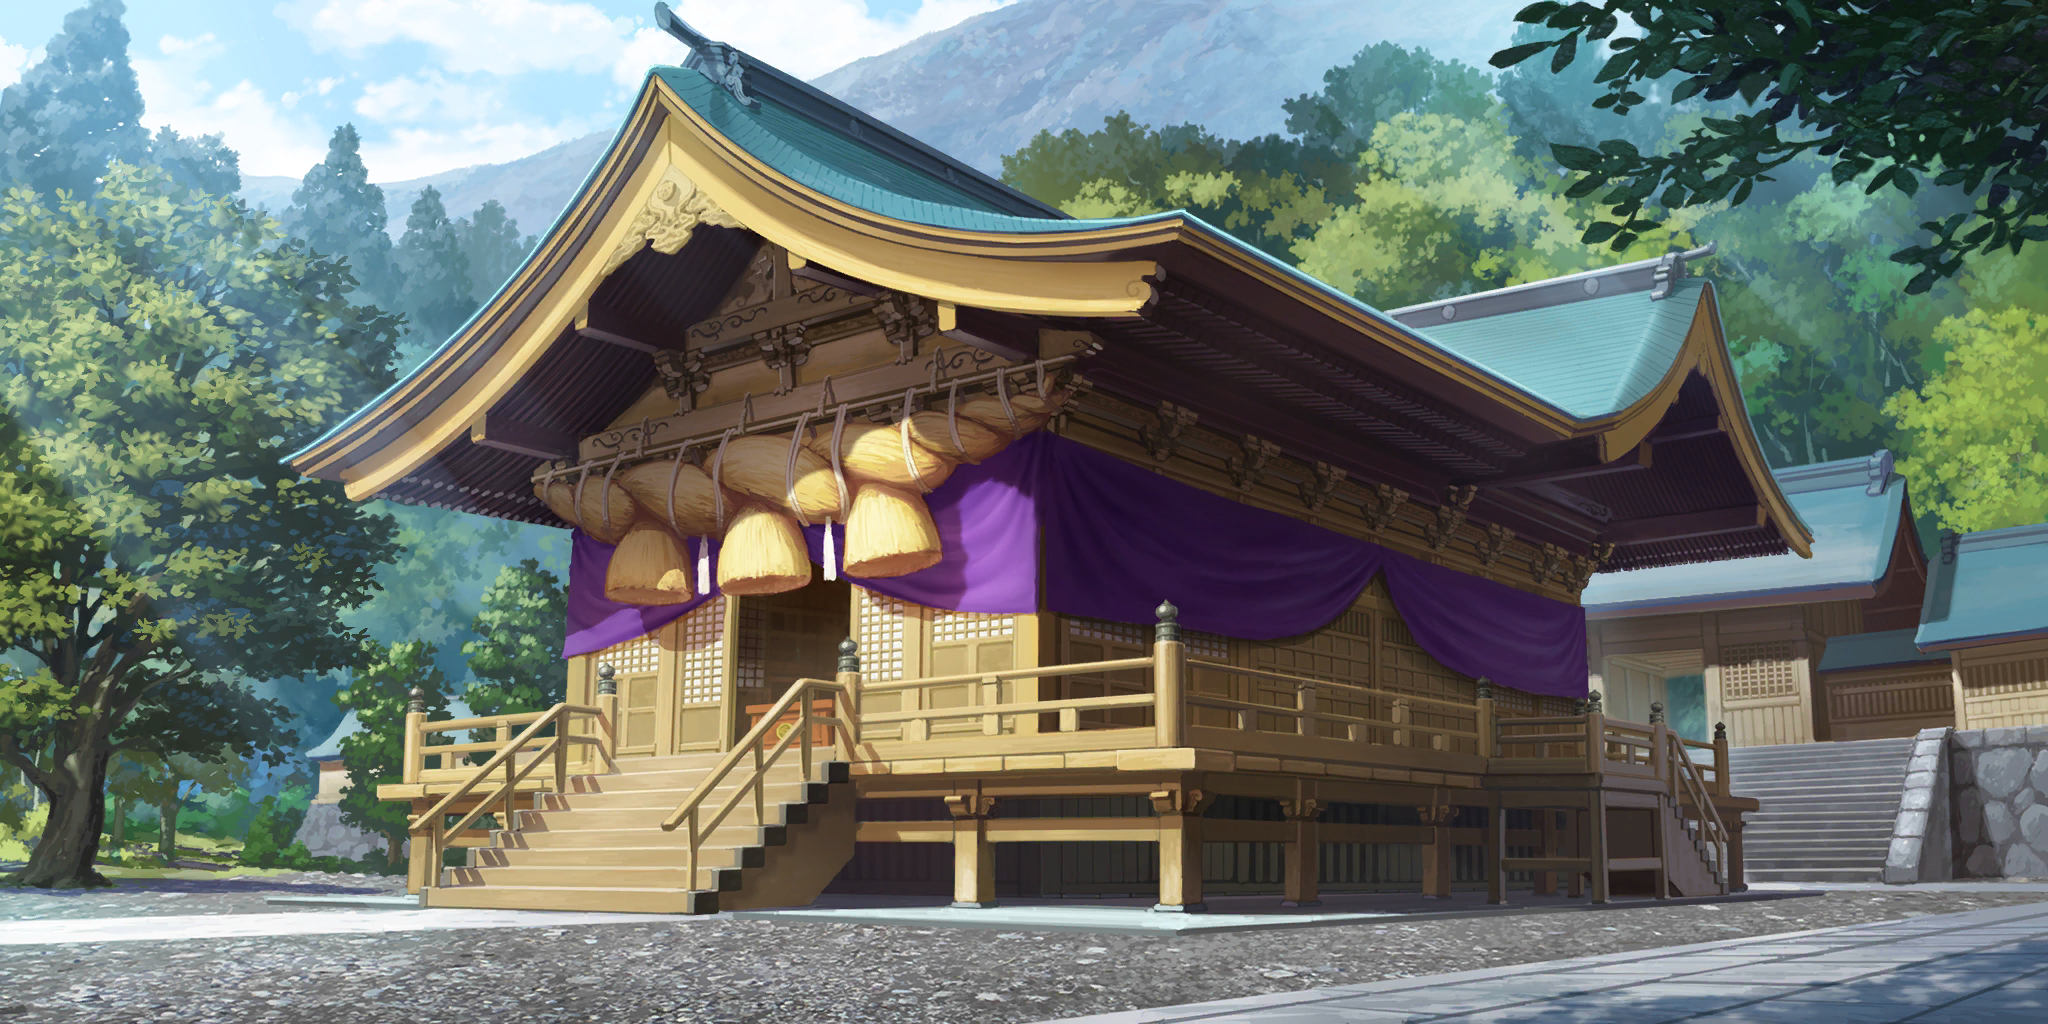 Touhou Animated Cursor Pack - Utilities - Moriya Shrine